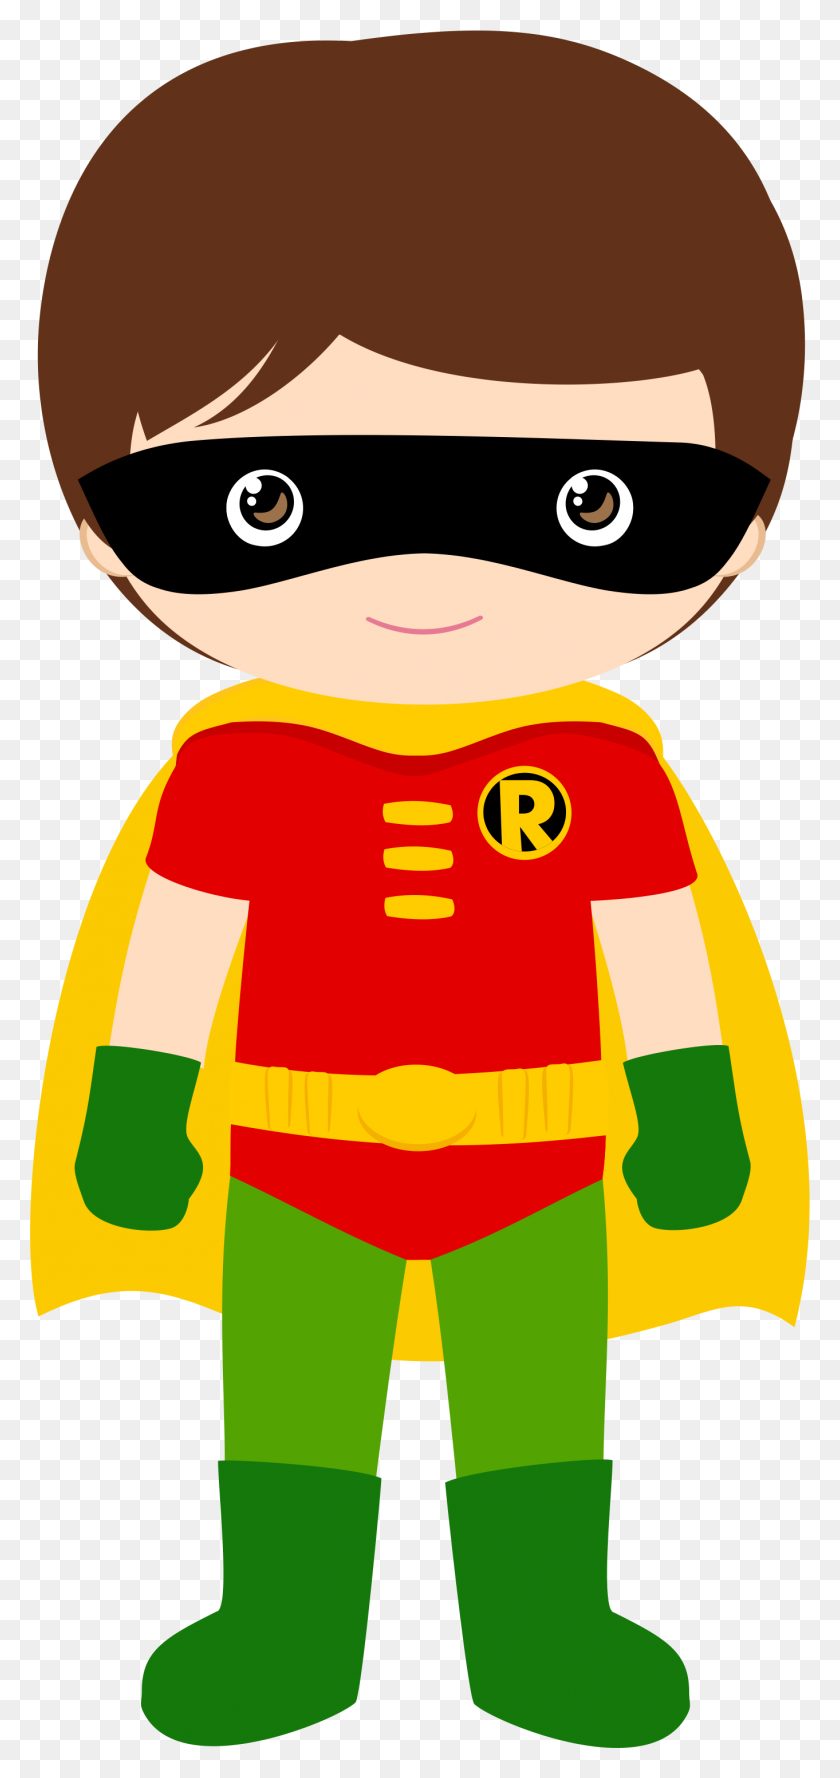 1362x3001 Class Room Superhero - Super Hero Clip Art